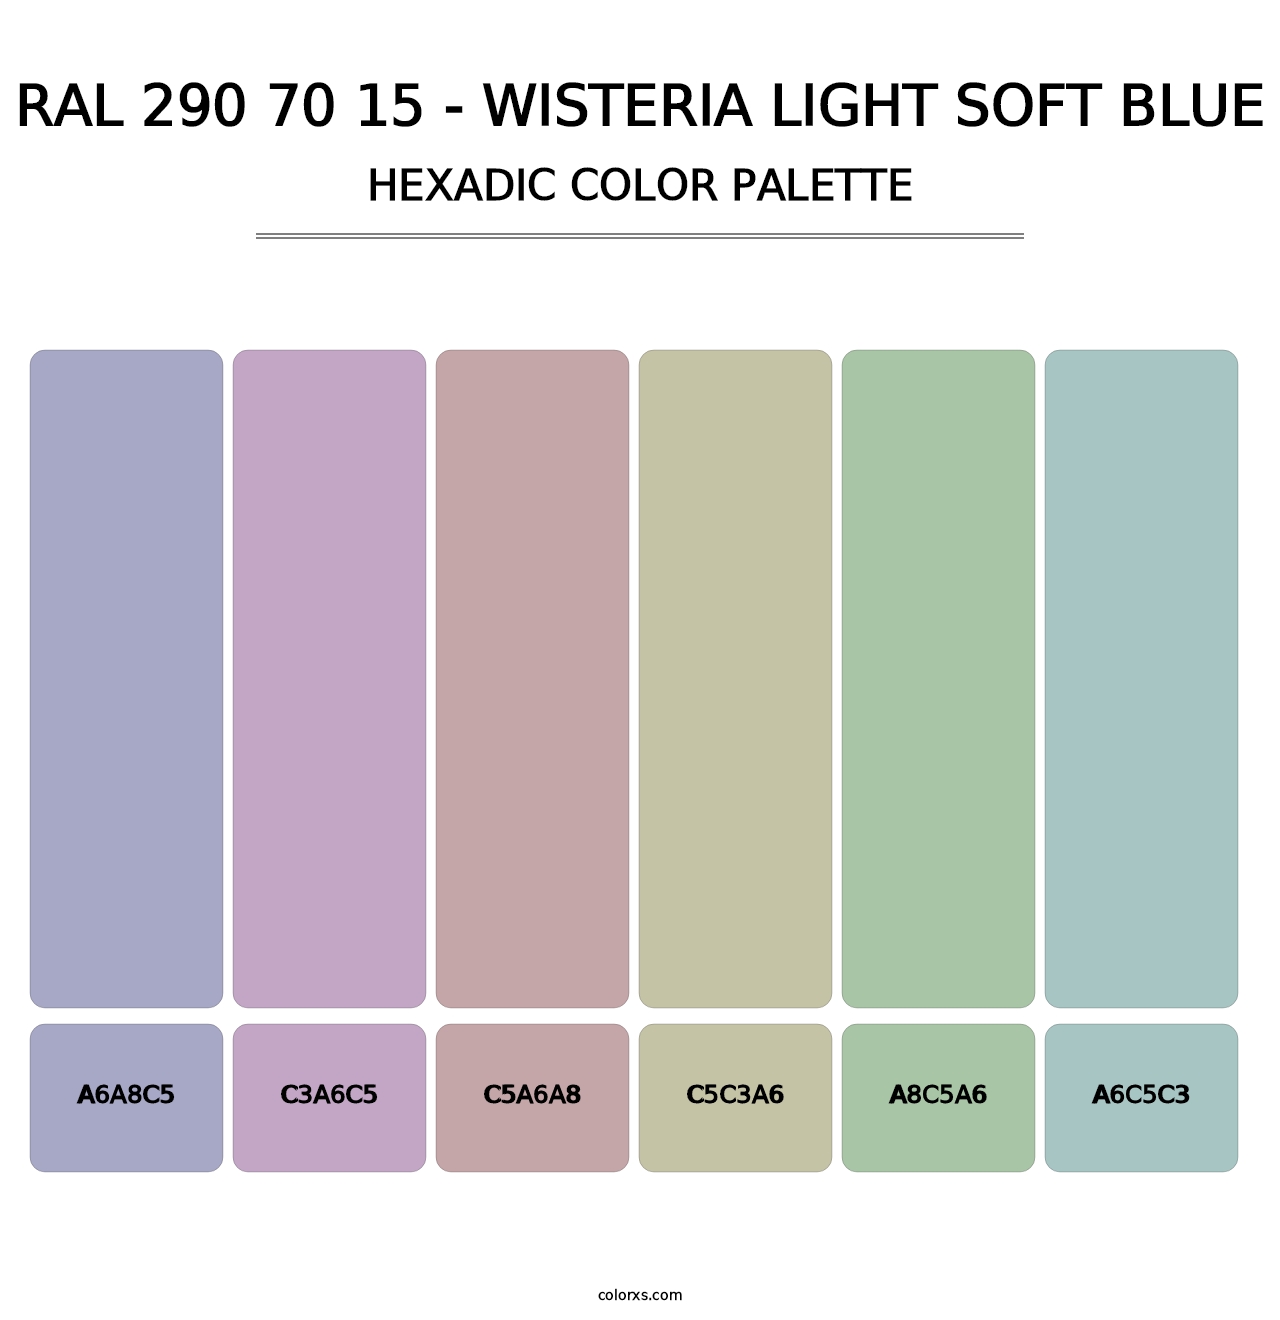 RAL 290 70 15 - Wisteria Light Soft Blue - Hexadic Color Palette